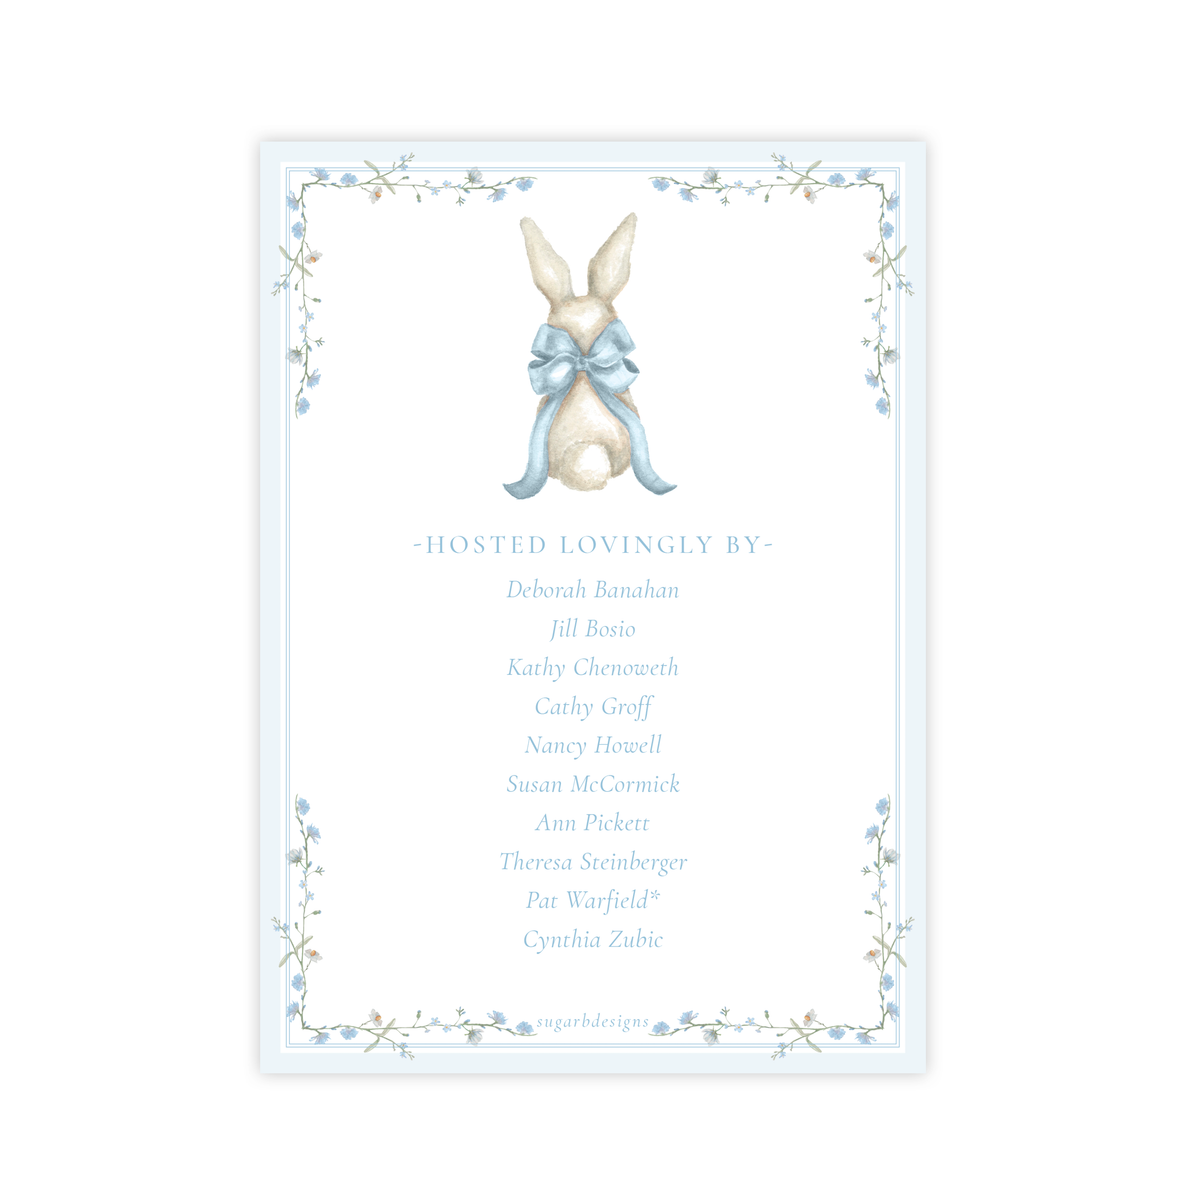 Peter Rabbit Baby Shower Invitation Boy Baby Shower Invitation